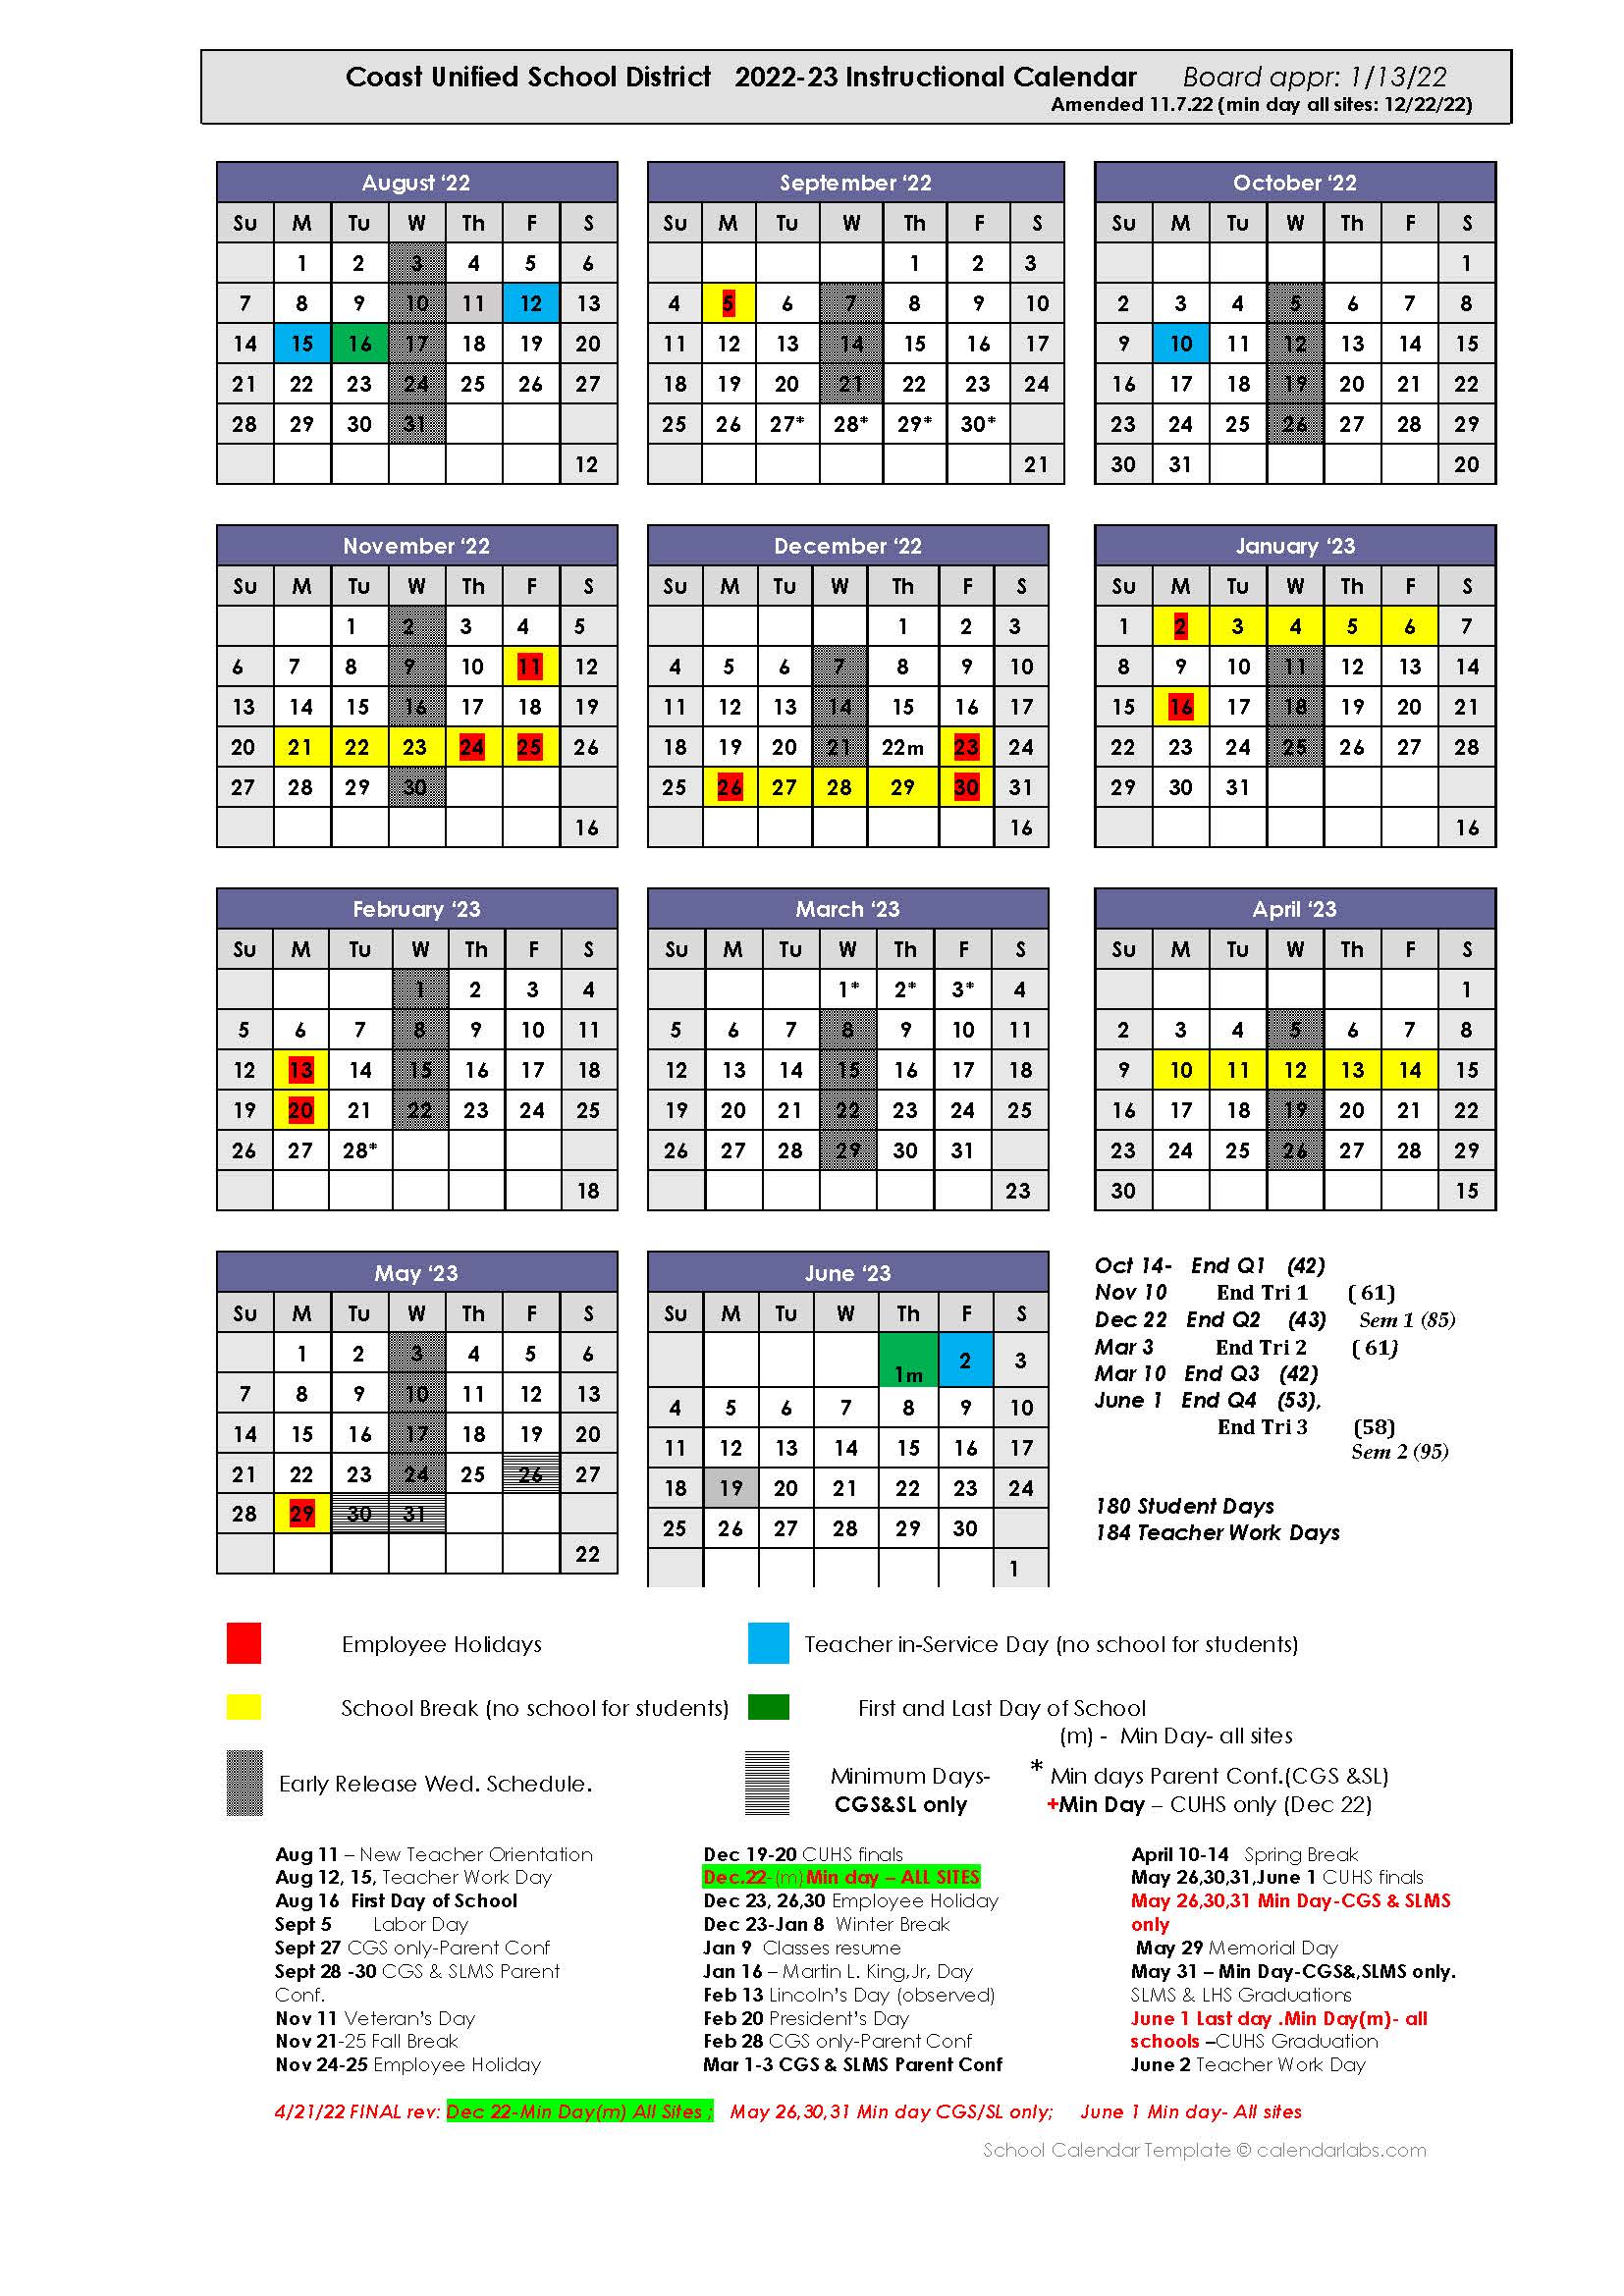 Coast Unified School District Calendar 2022 2023 Salary Schedule